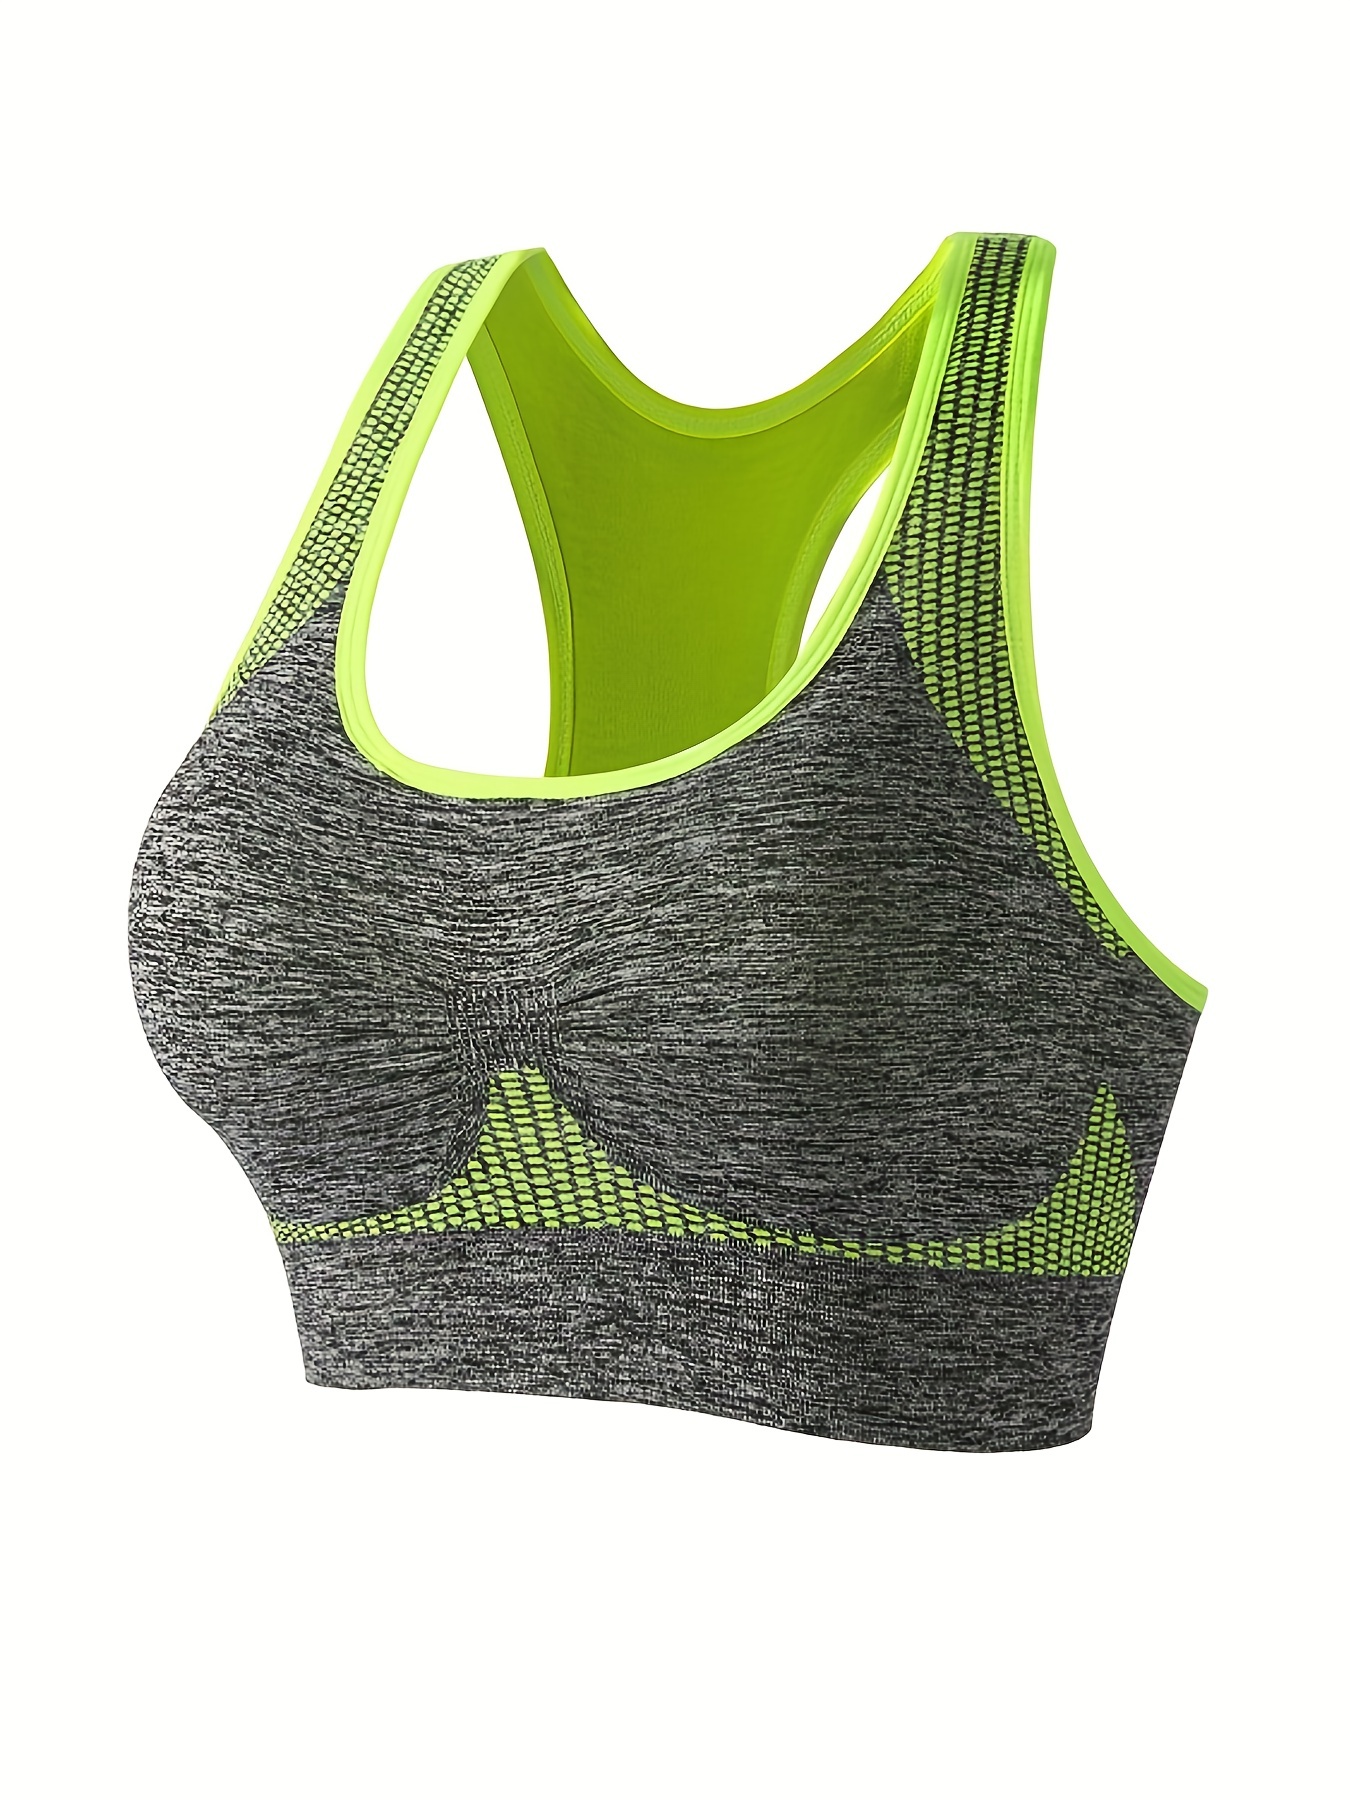 WeMen Sports Bra - Black and Lime Green – WeMen Fitness